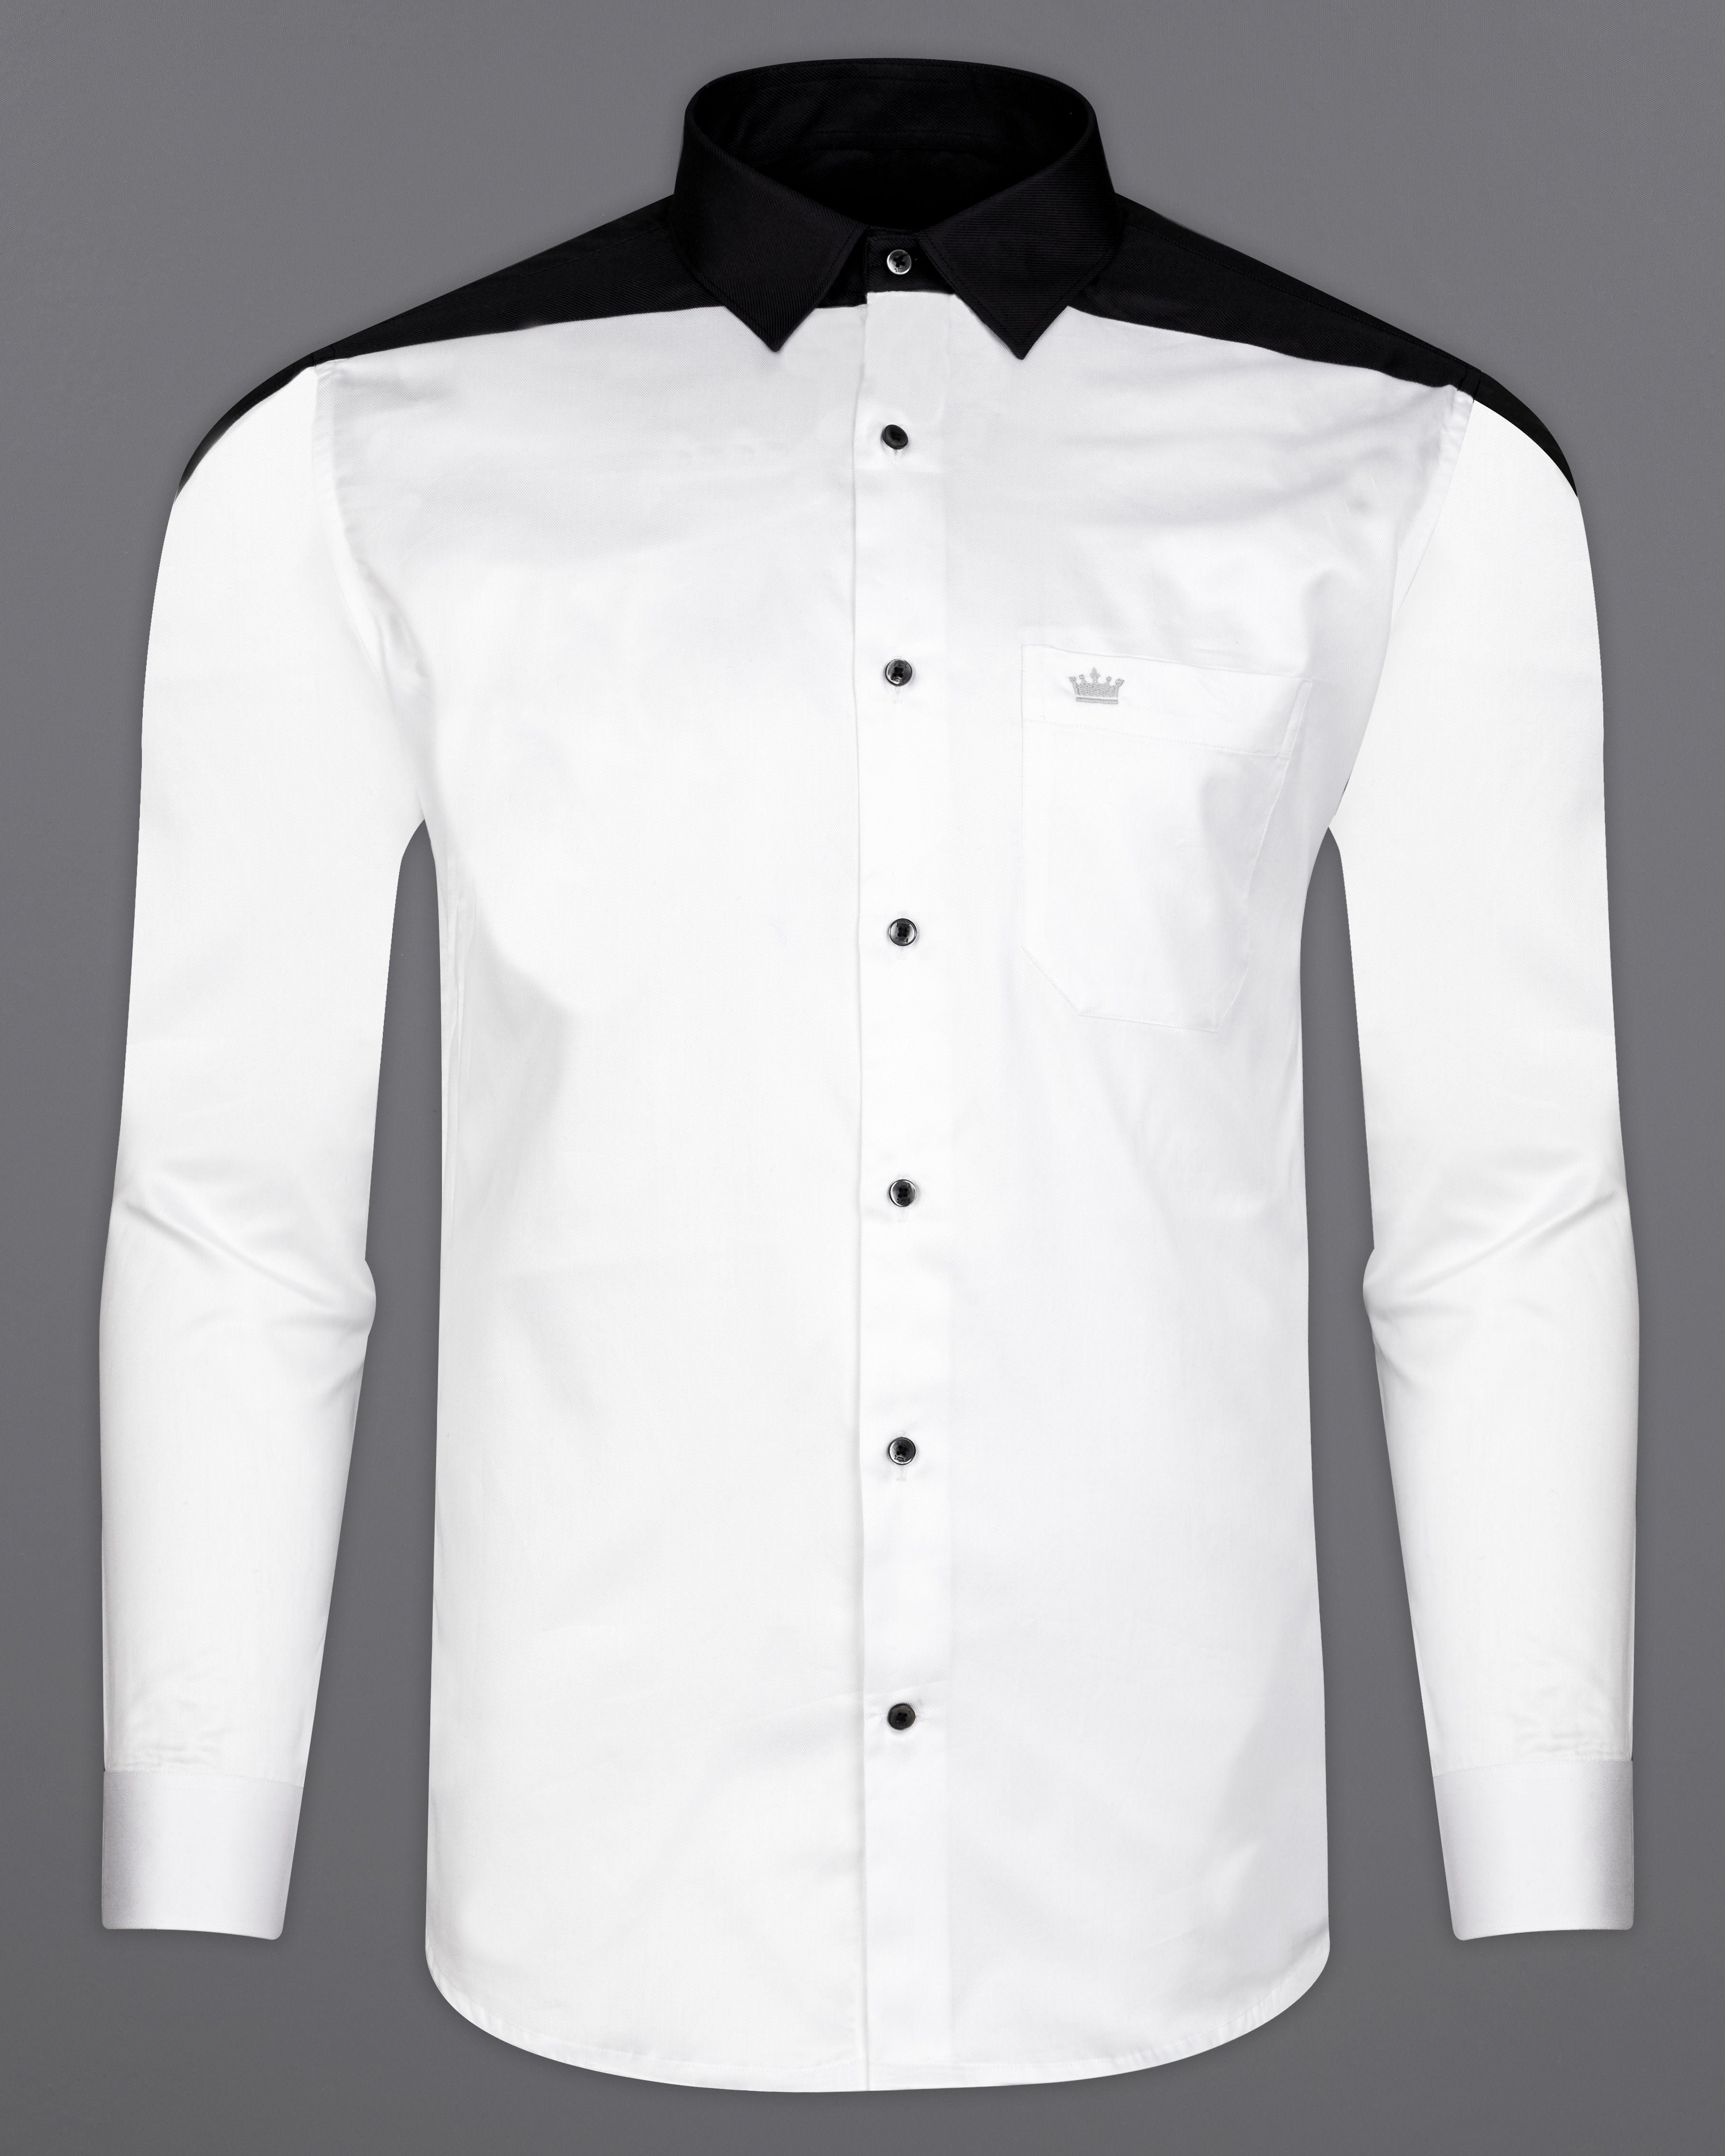 Bright White and Black Twill Premium Cotton Designer Shirt